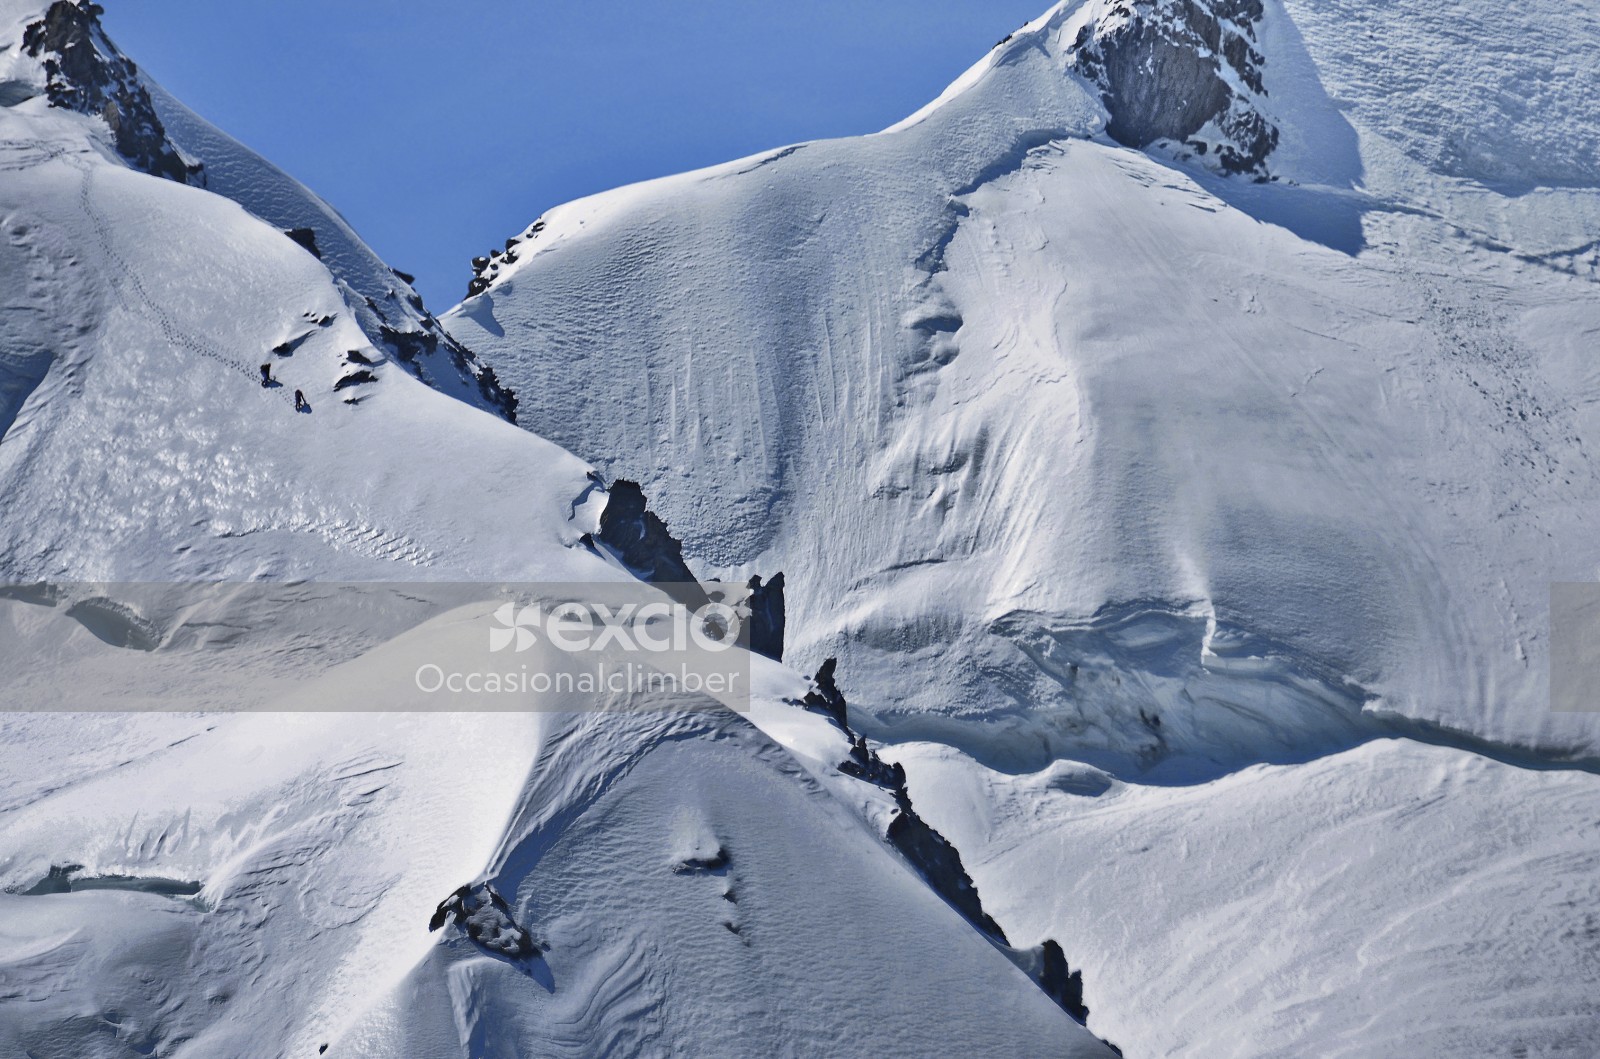 Climbers descending Mount Dixon